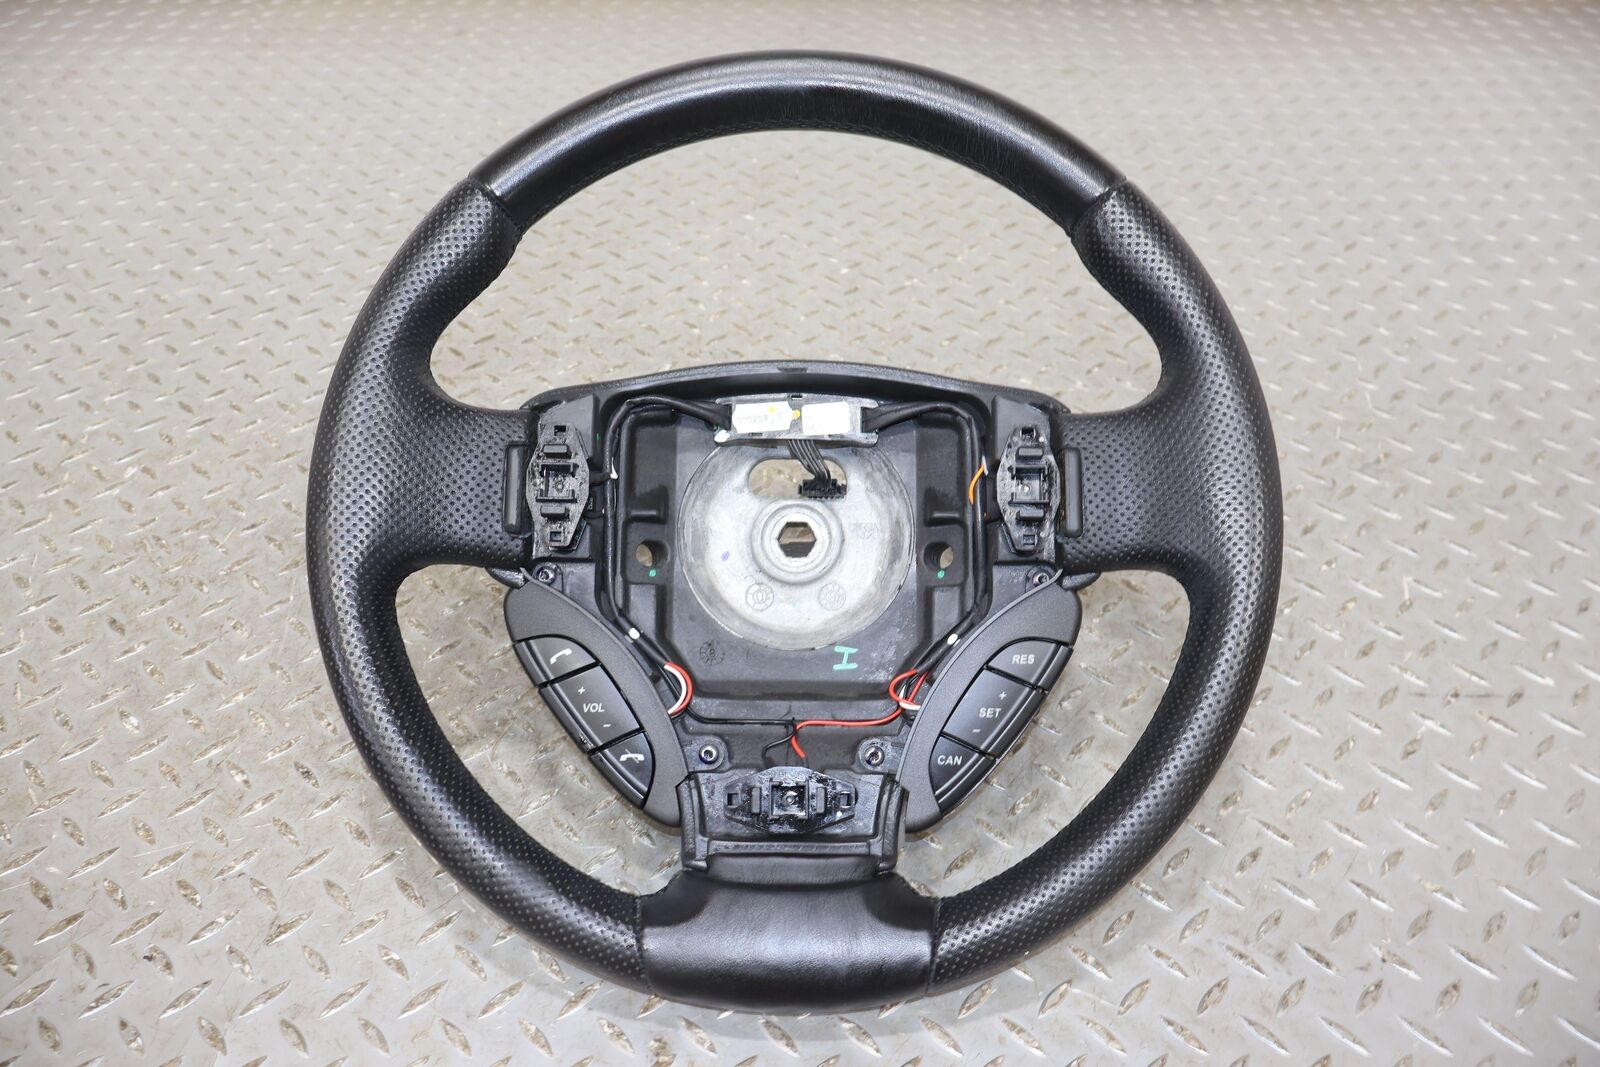 09 Aston Martin V8 Vantage Leather OEM Steering Wheel (Black) Light Wear